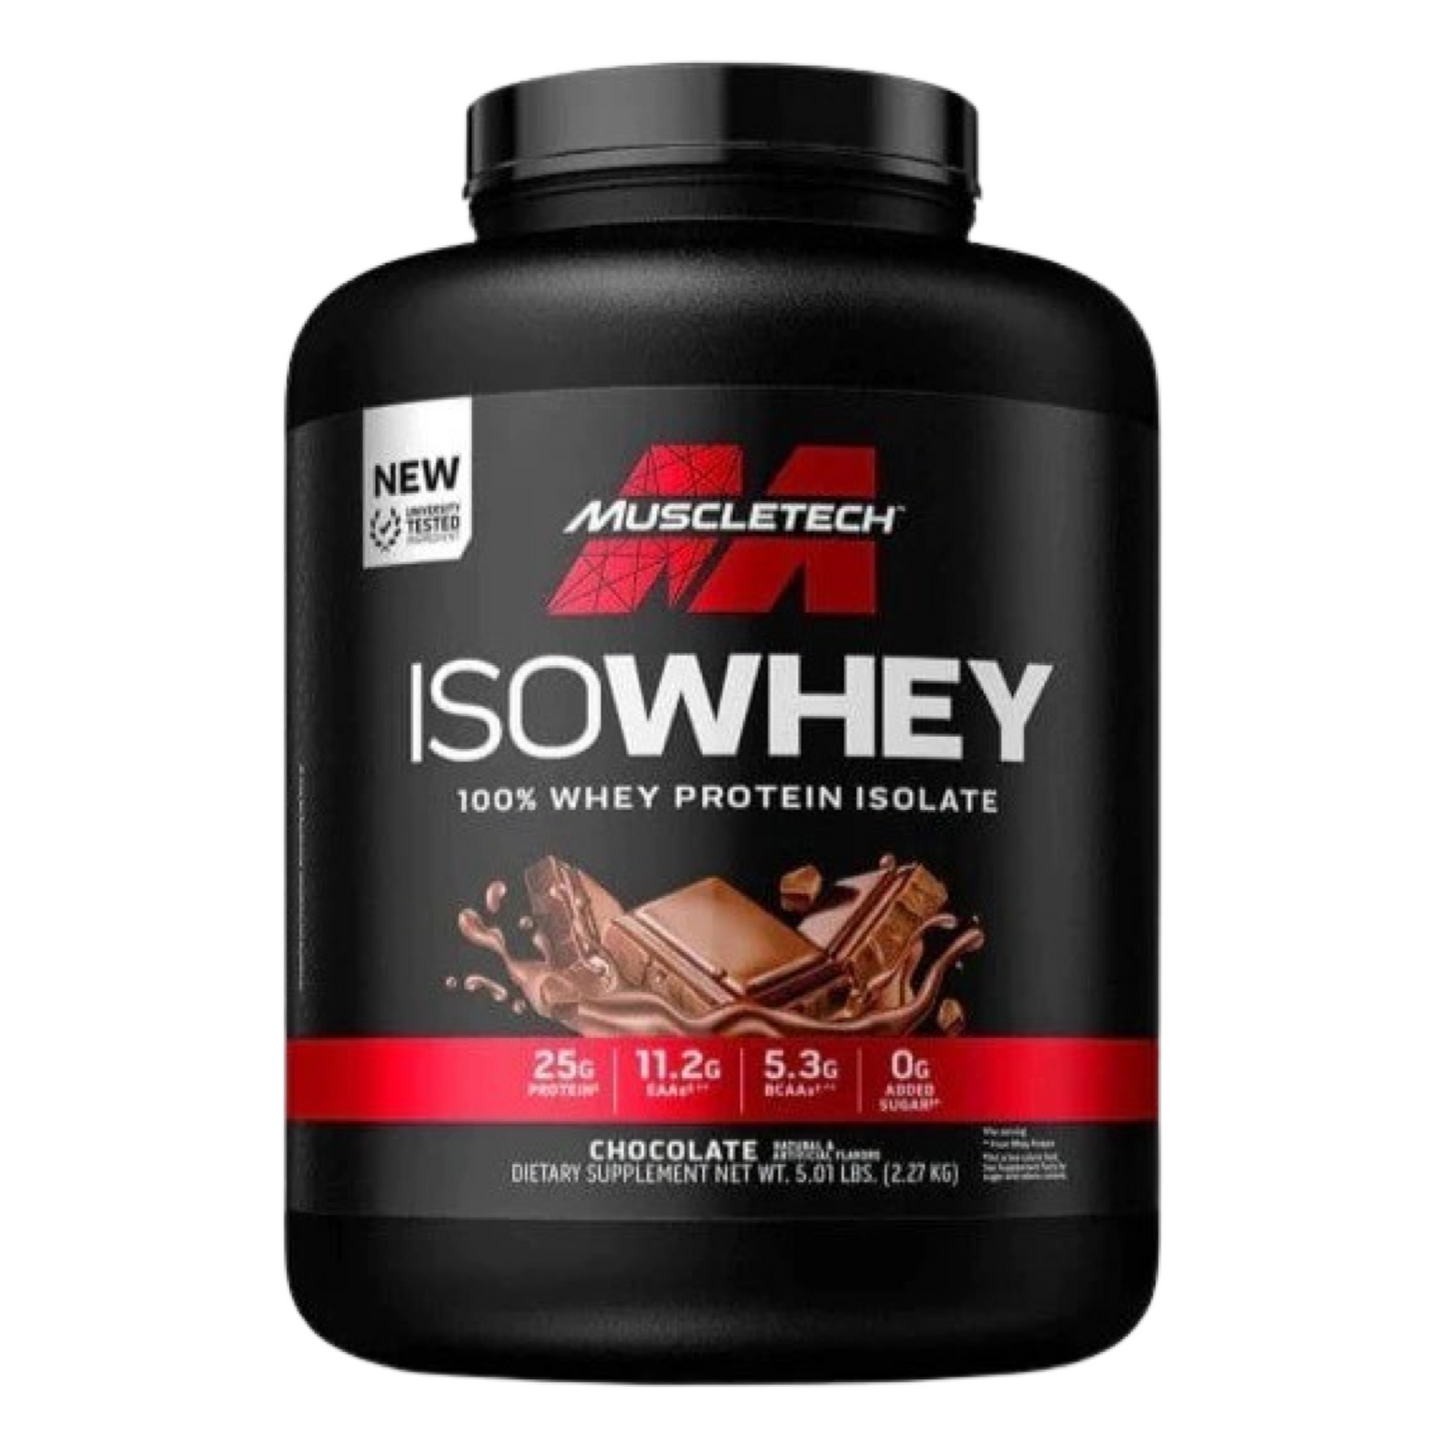 Muscletech Isowhey 5lb Chocolate